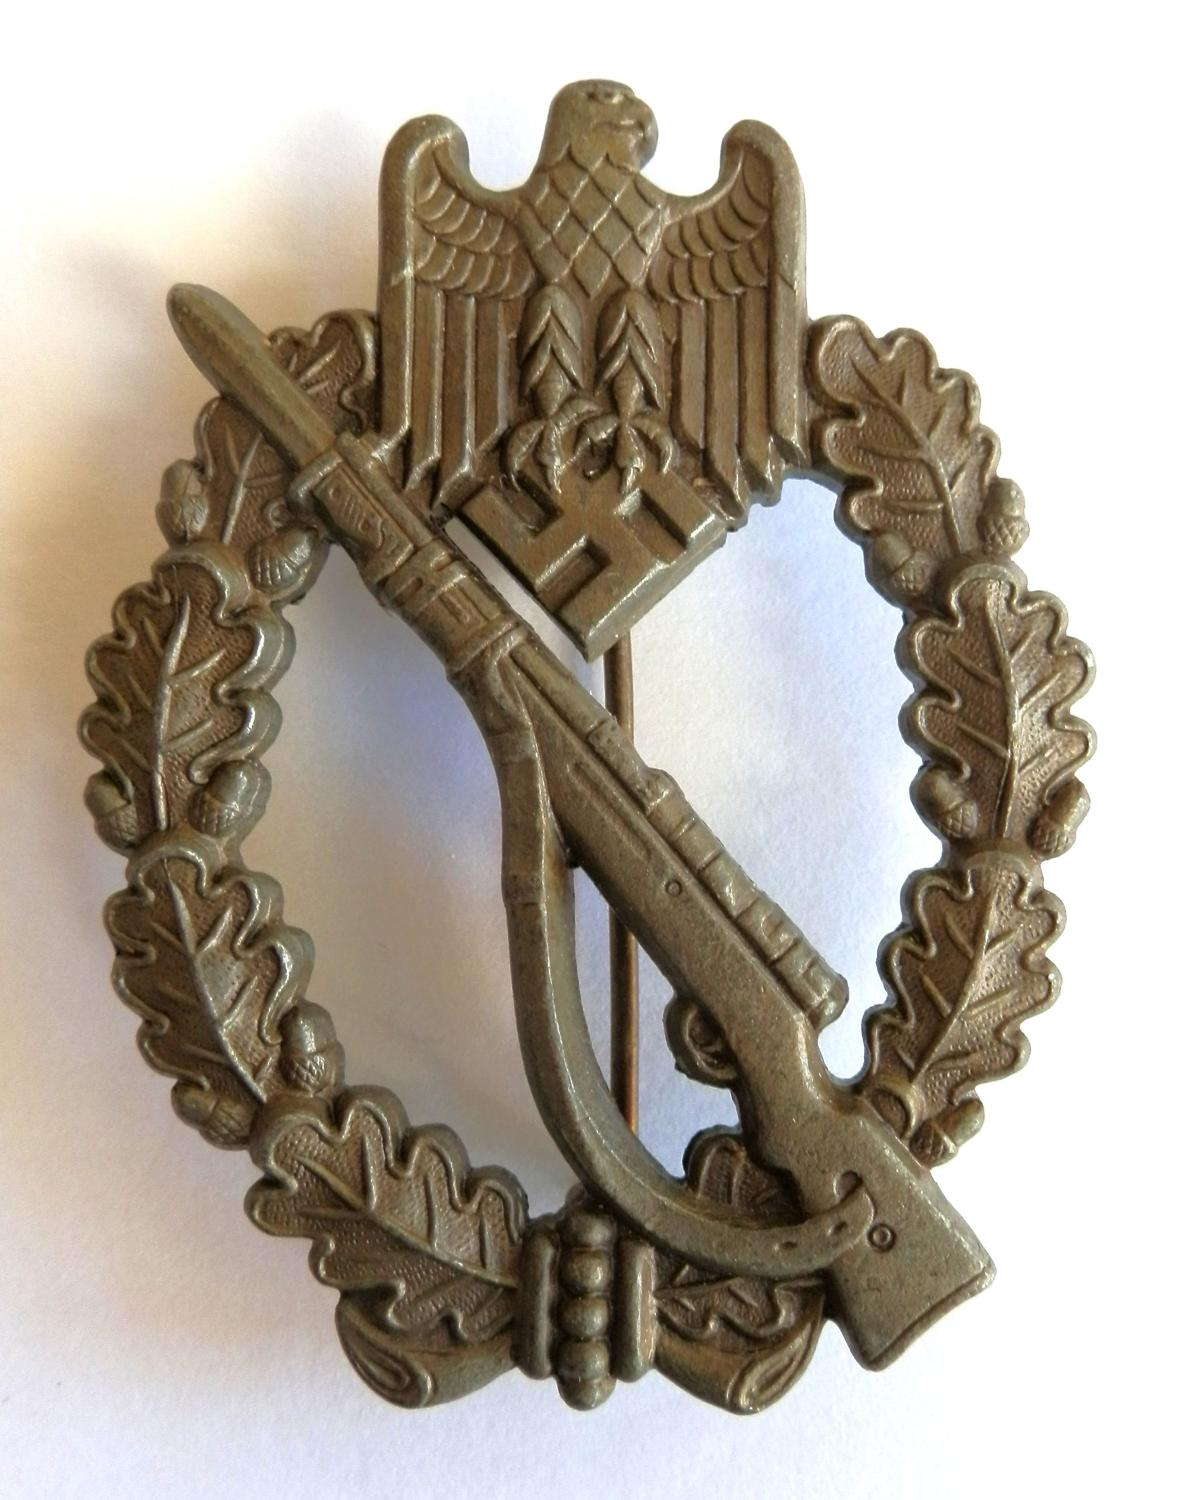 German Infantry Assault Badge